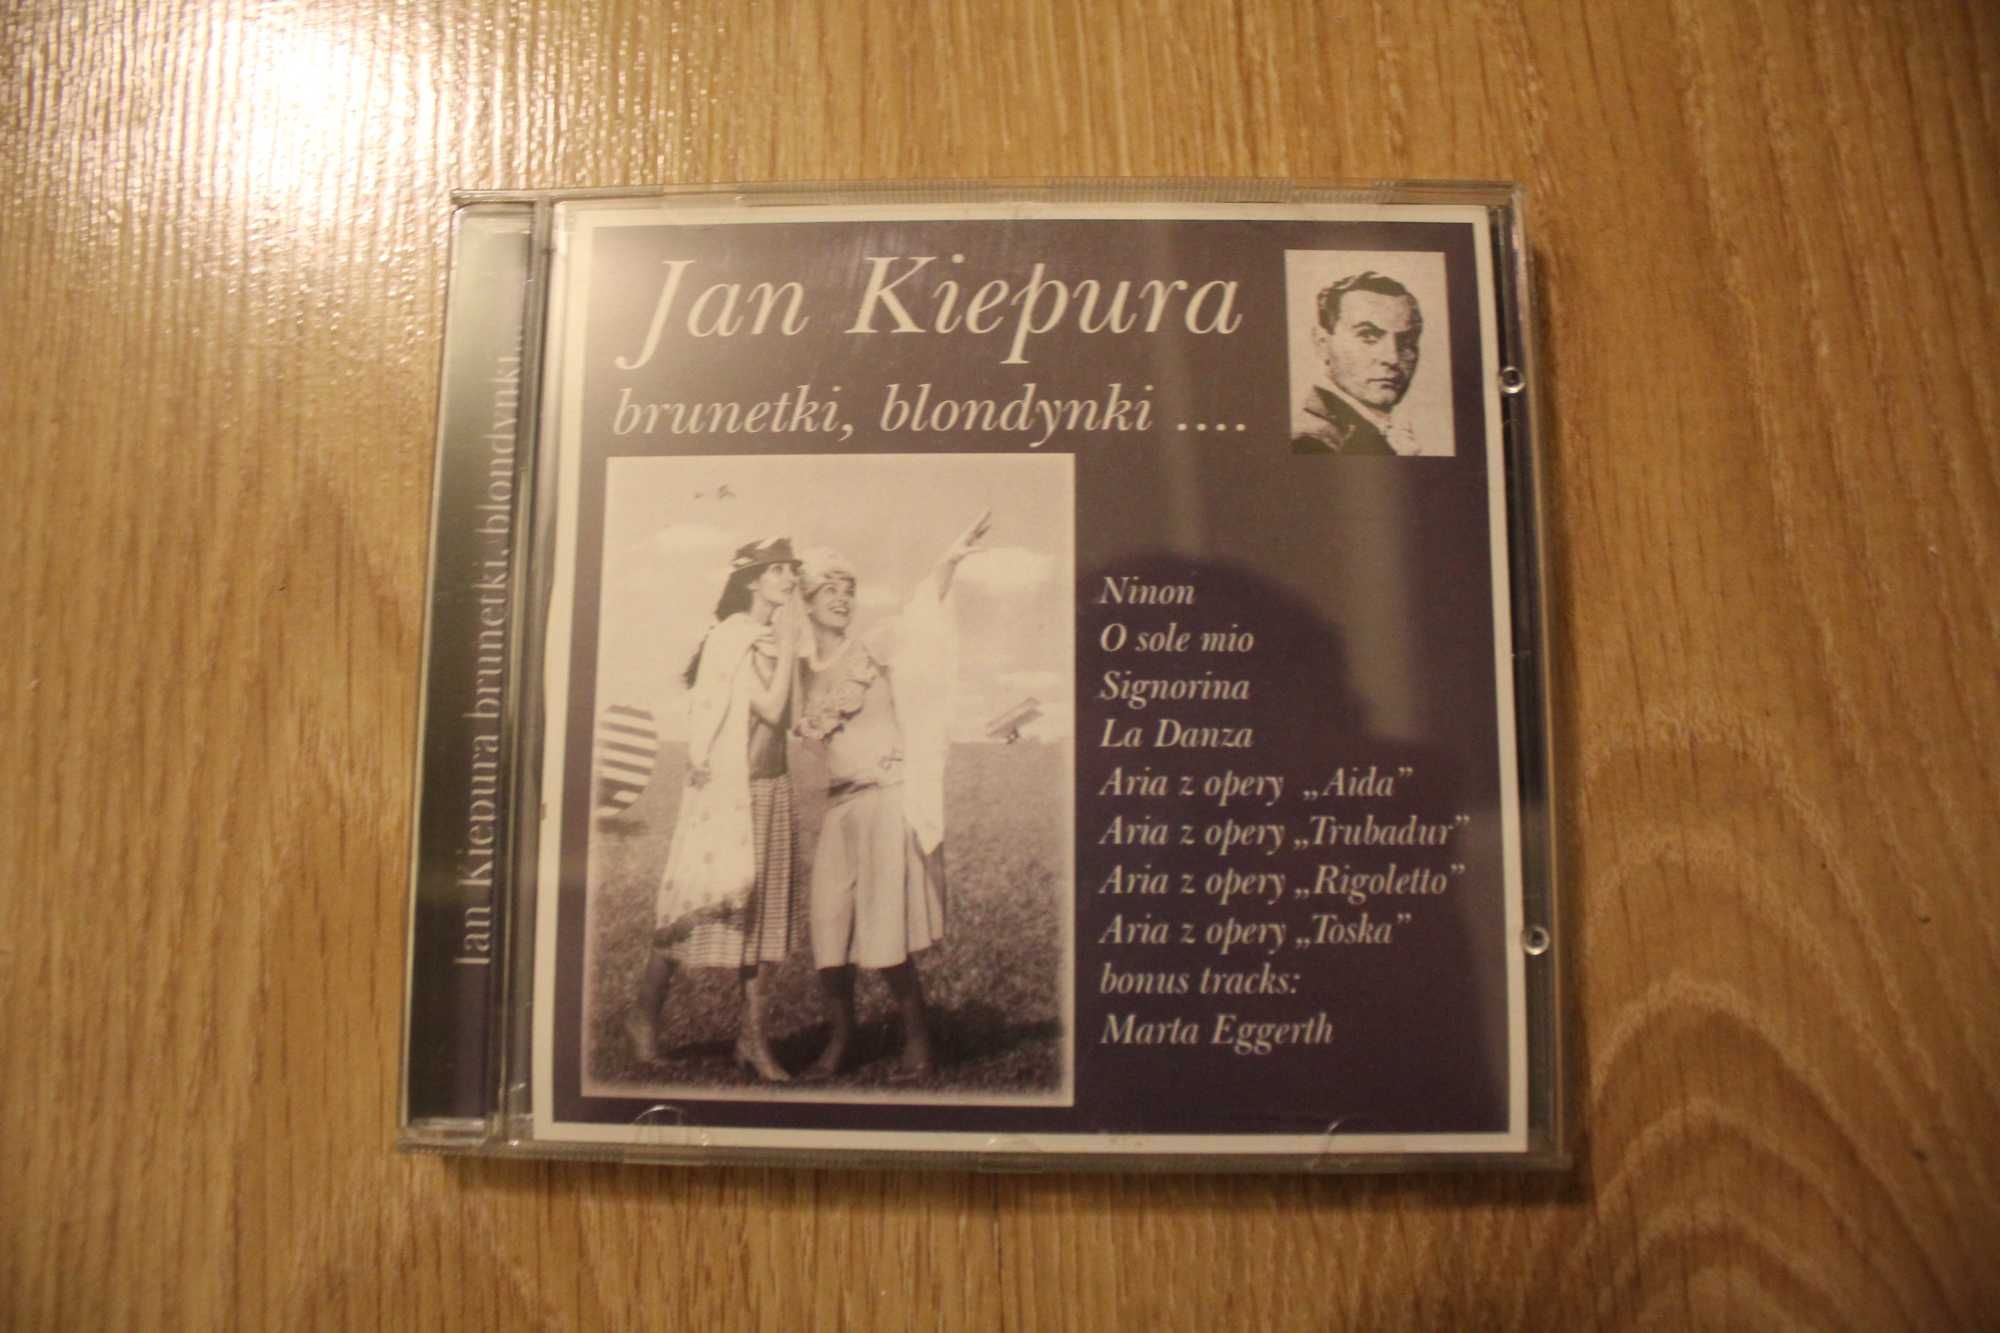 Jan Kiepura "brunetki, blondynki" Płyta CD